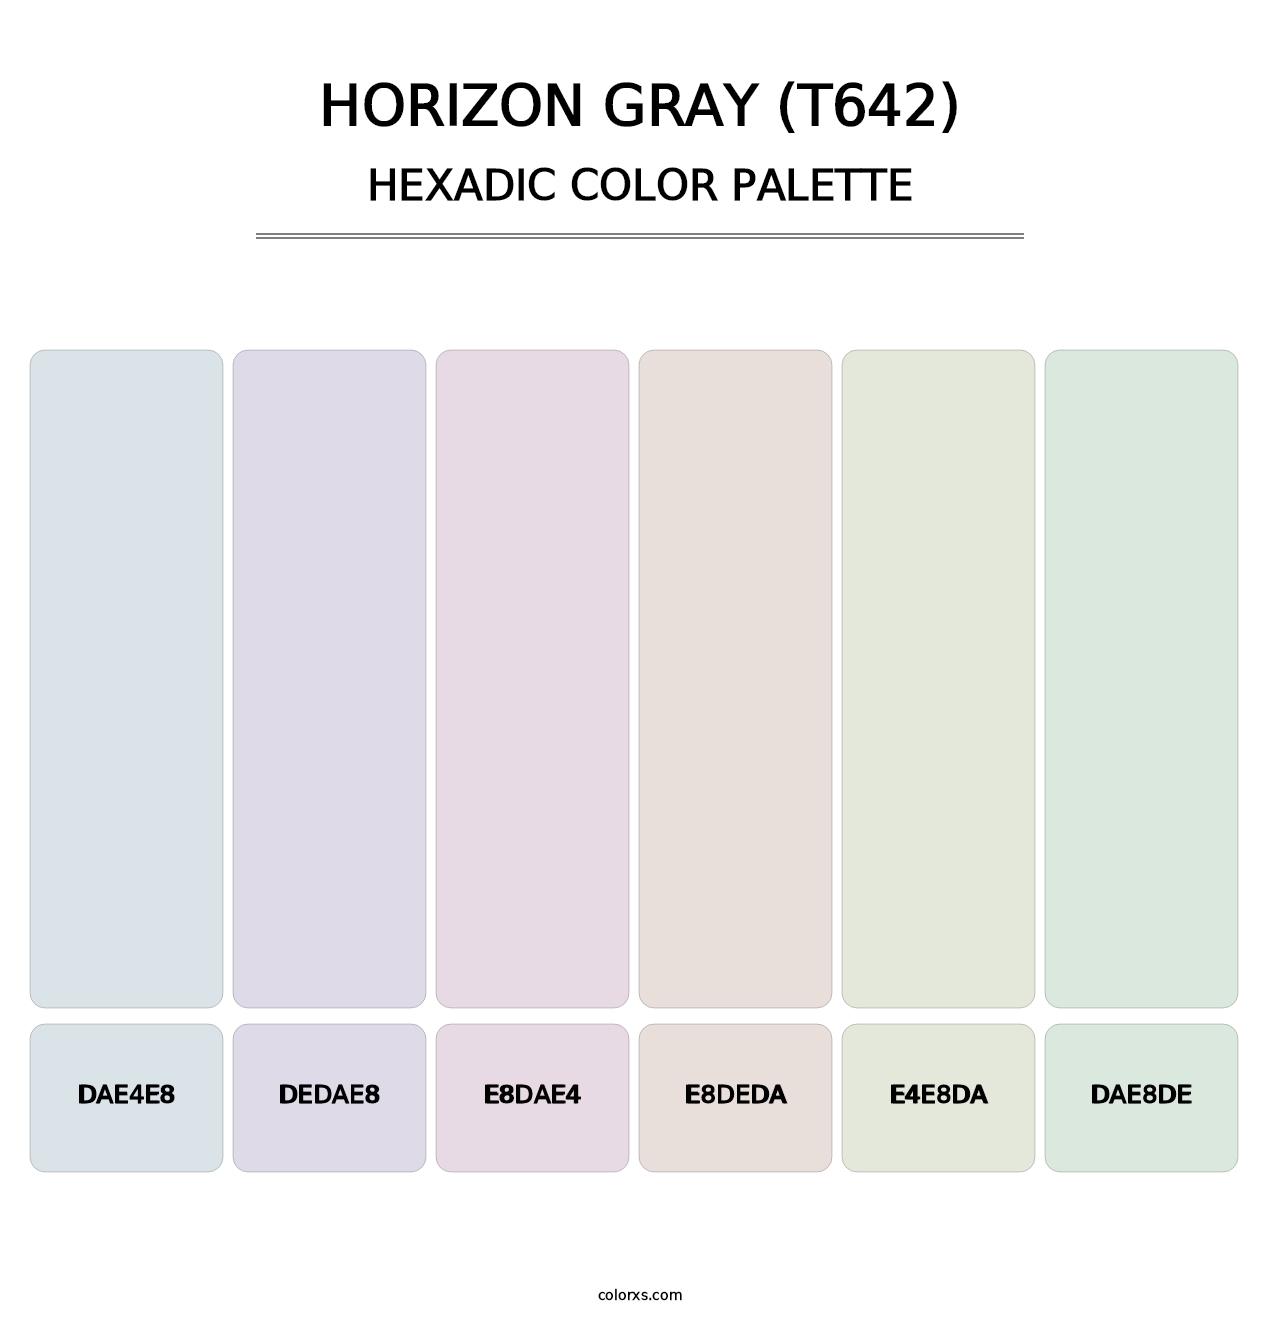 Horizon Gray (T642) - Hexadic Color Palette